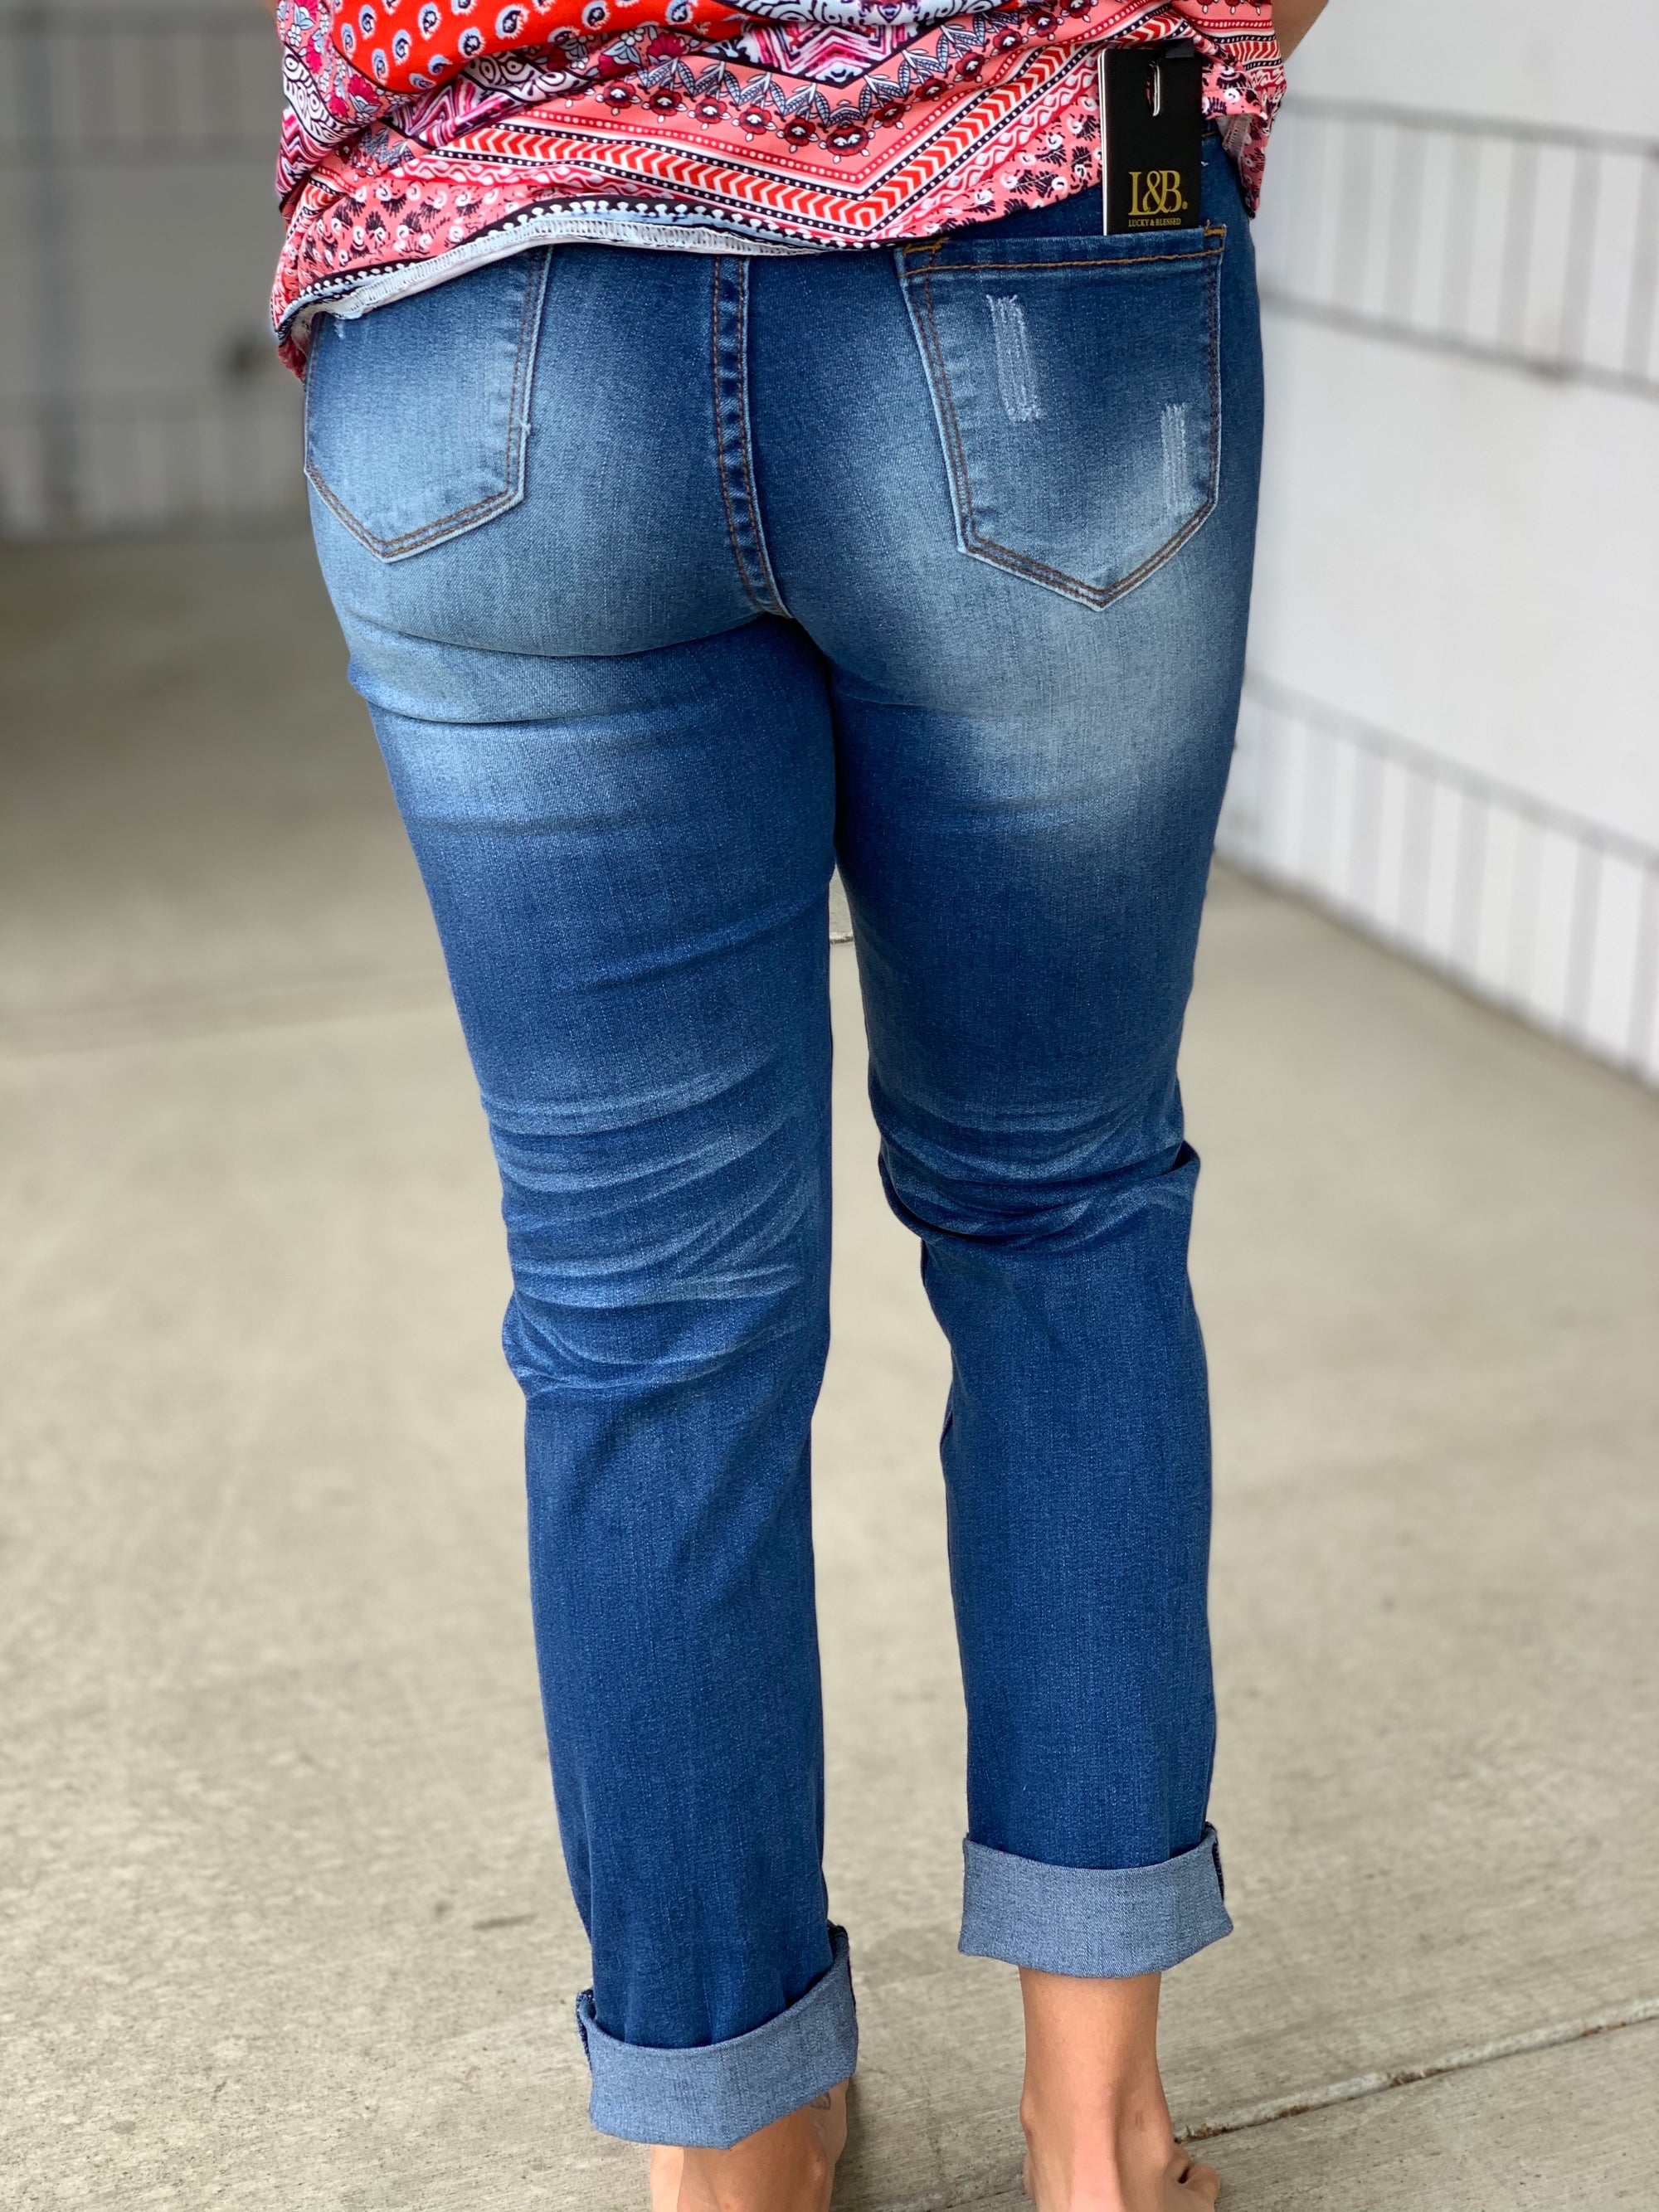 L & B Destroyed Boyfriend Jeans-Med Wash - STB Boutique